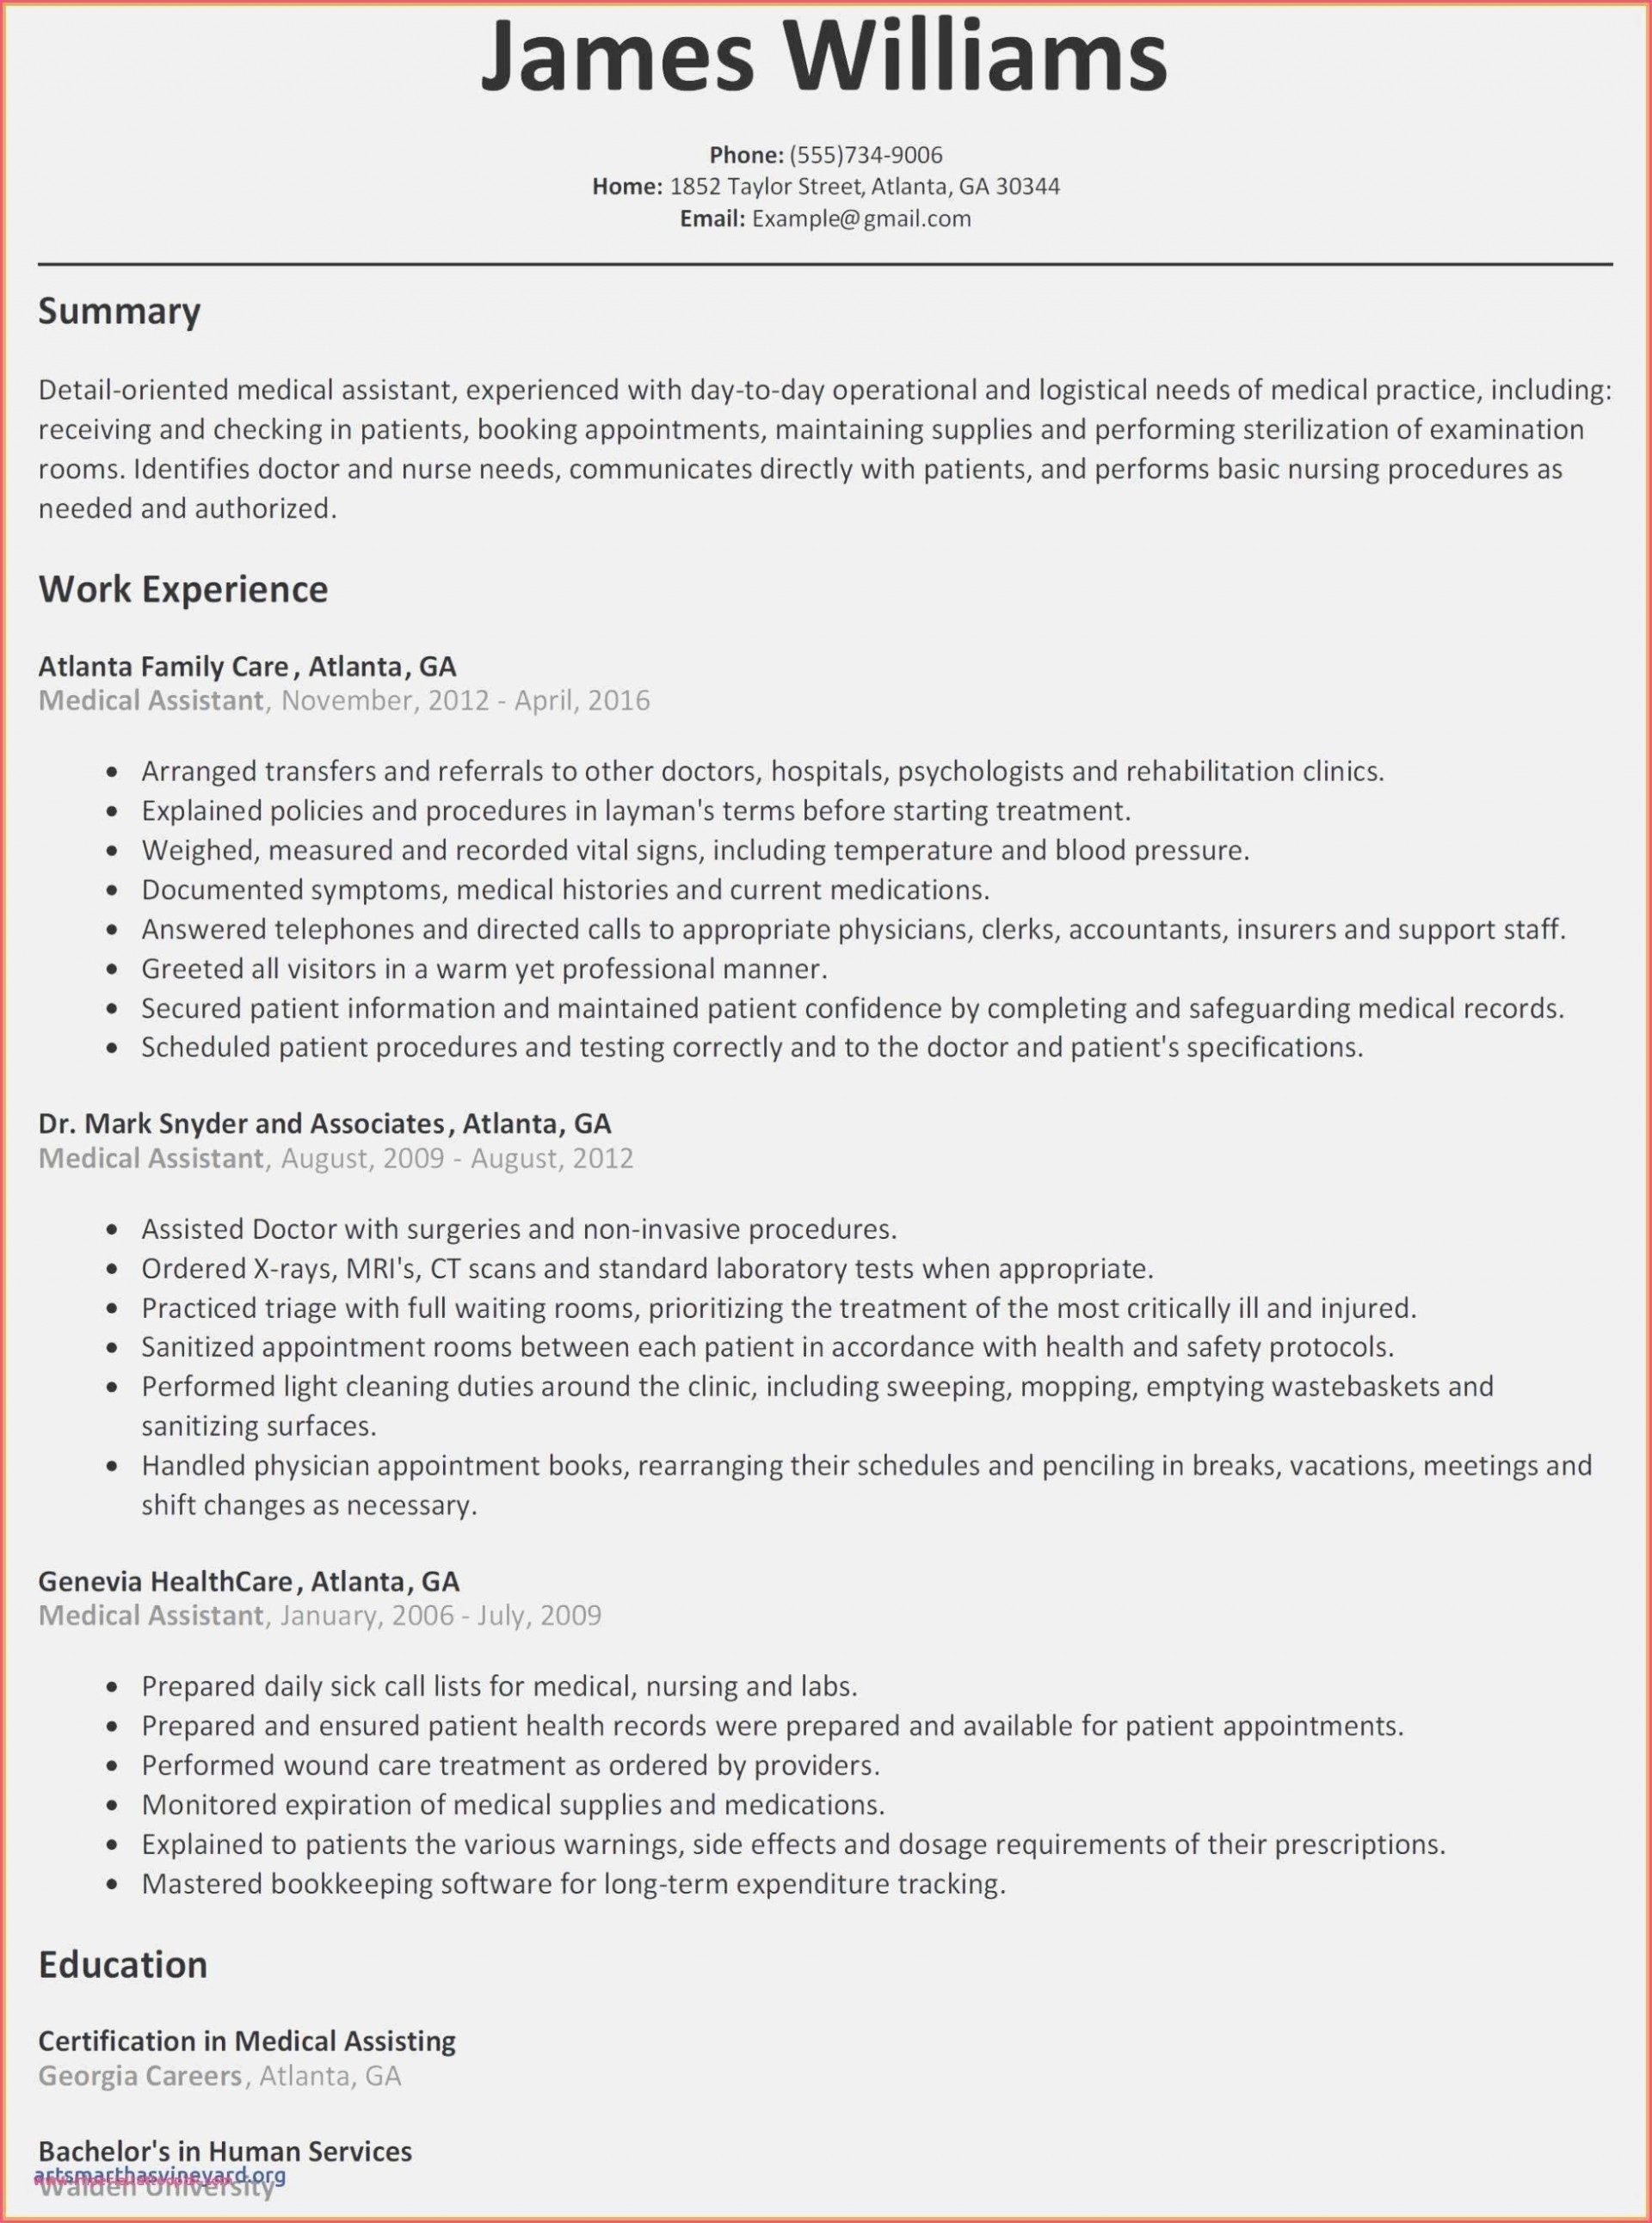 Federal Resume Template 025 Best Microsoft Word Federal Resume Template Government Samples Of 1920x2585 federal resume template|wikiresume.com